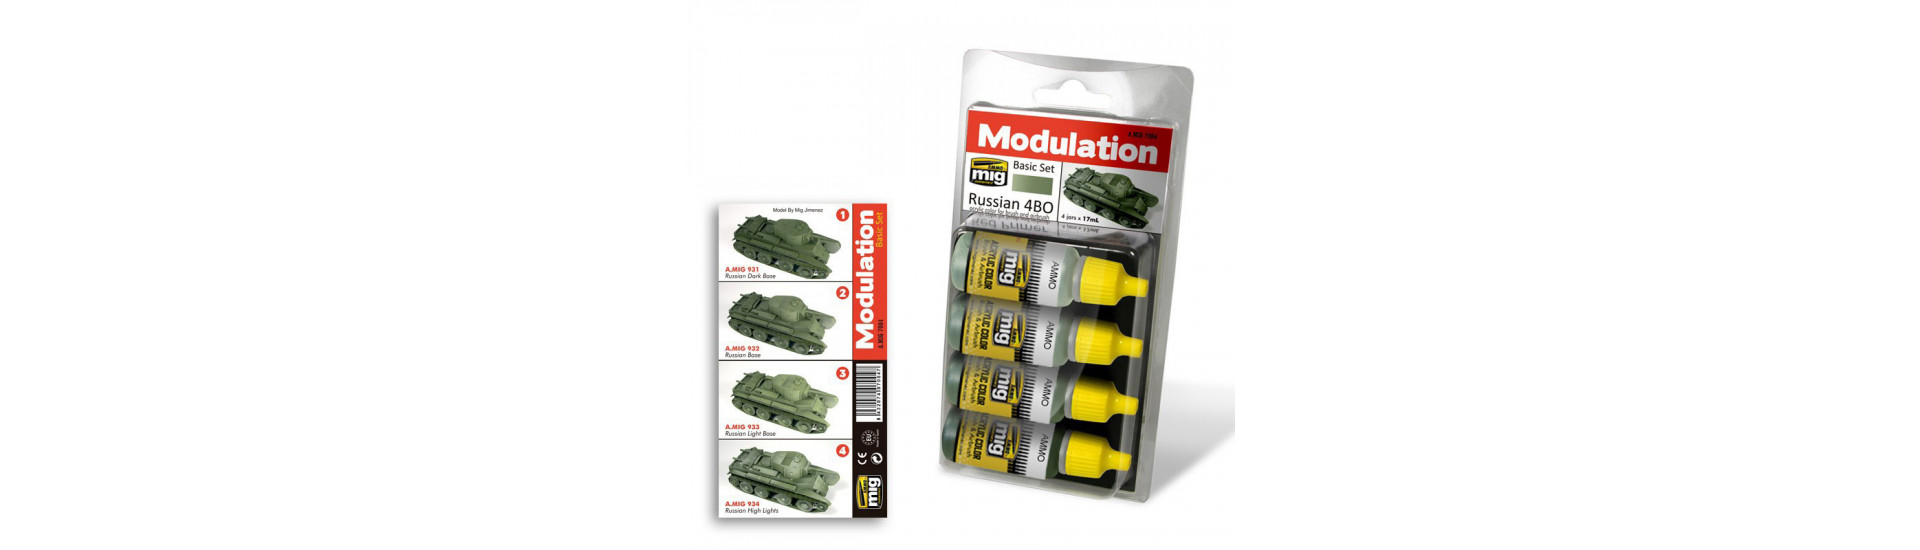 Set modulation Ammo